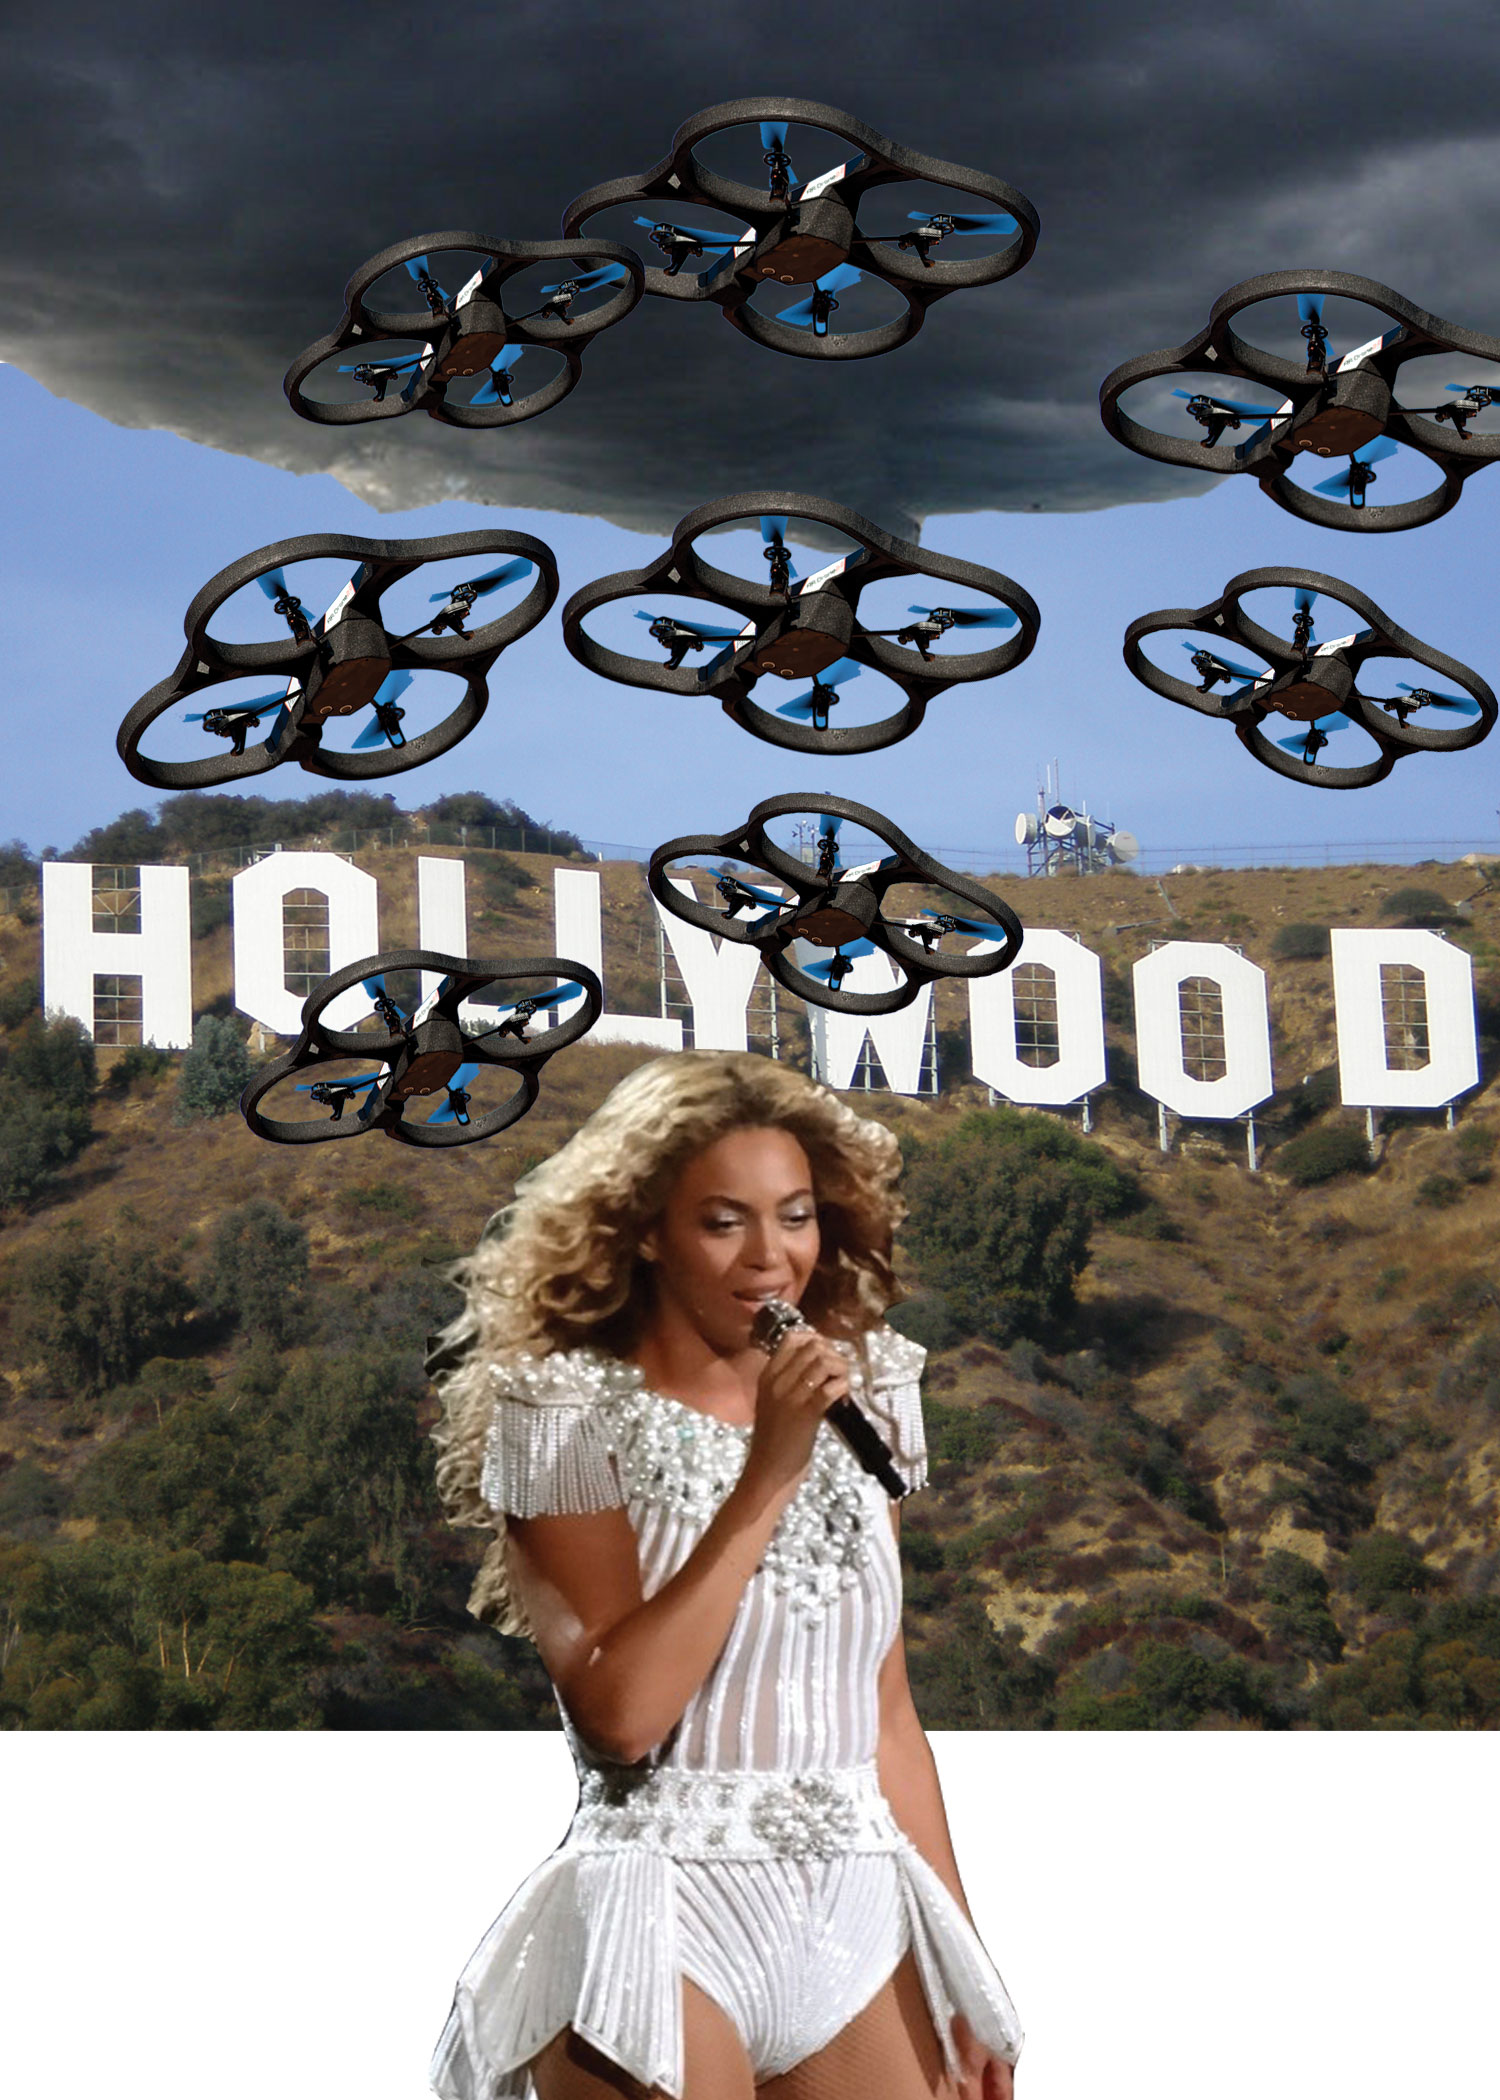 Celebrity paparazzi drone cloud